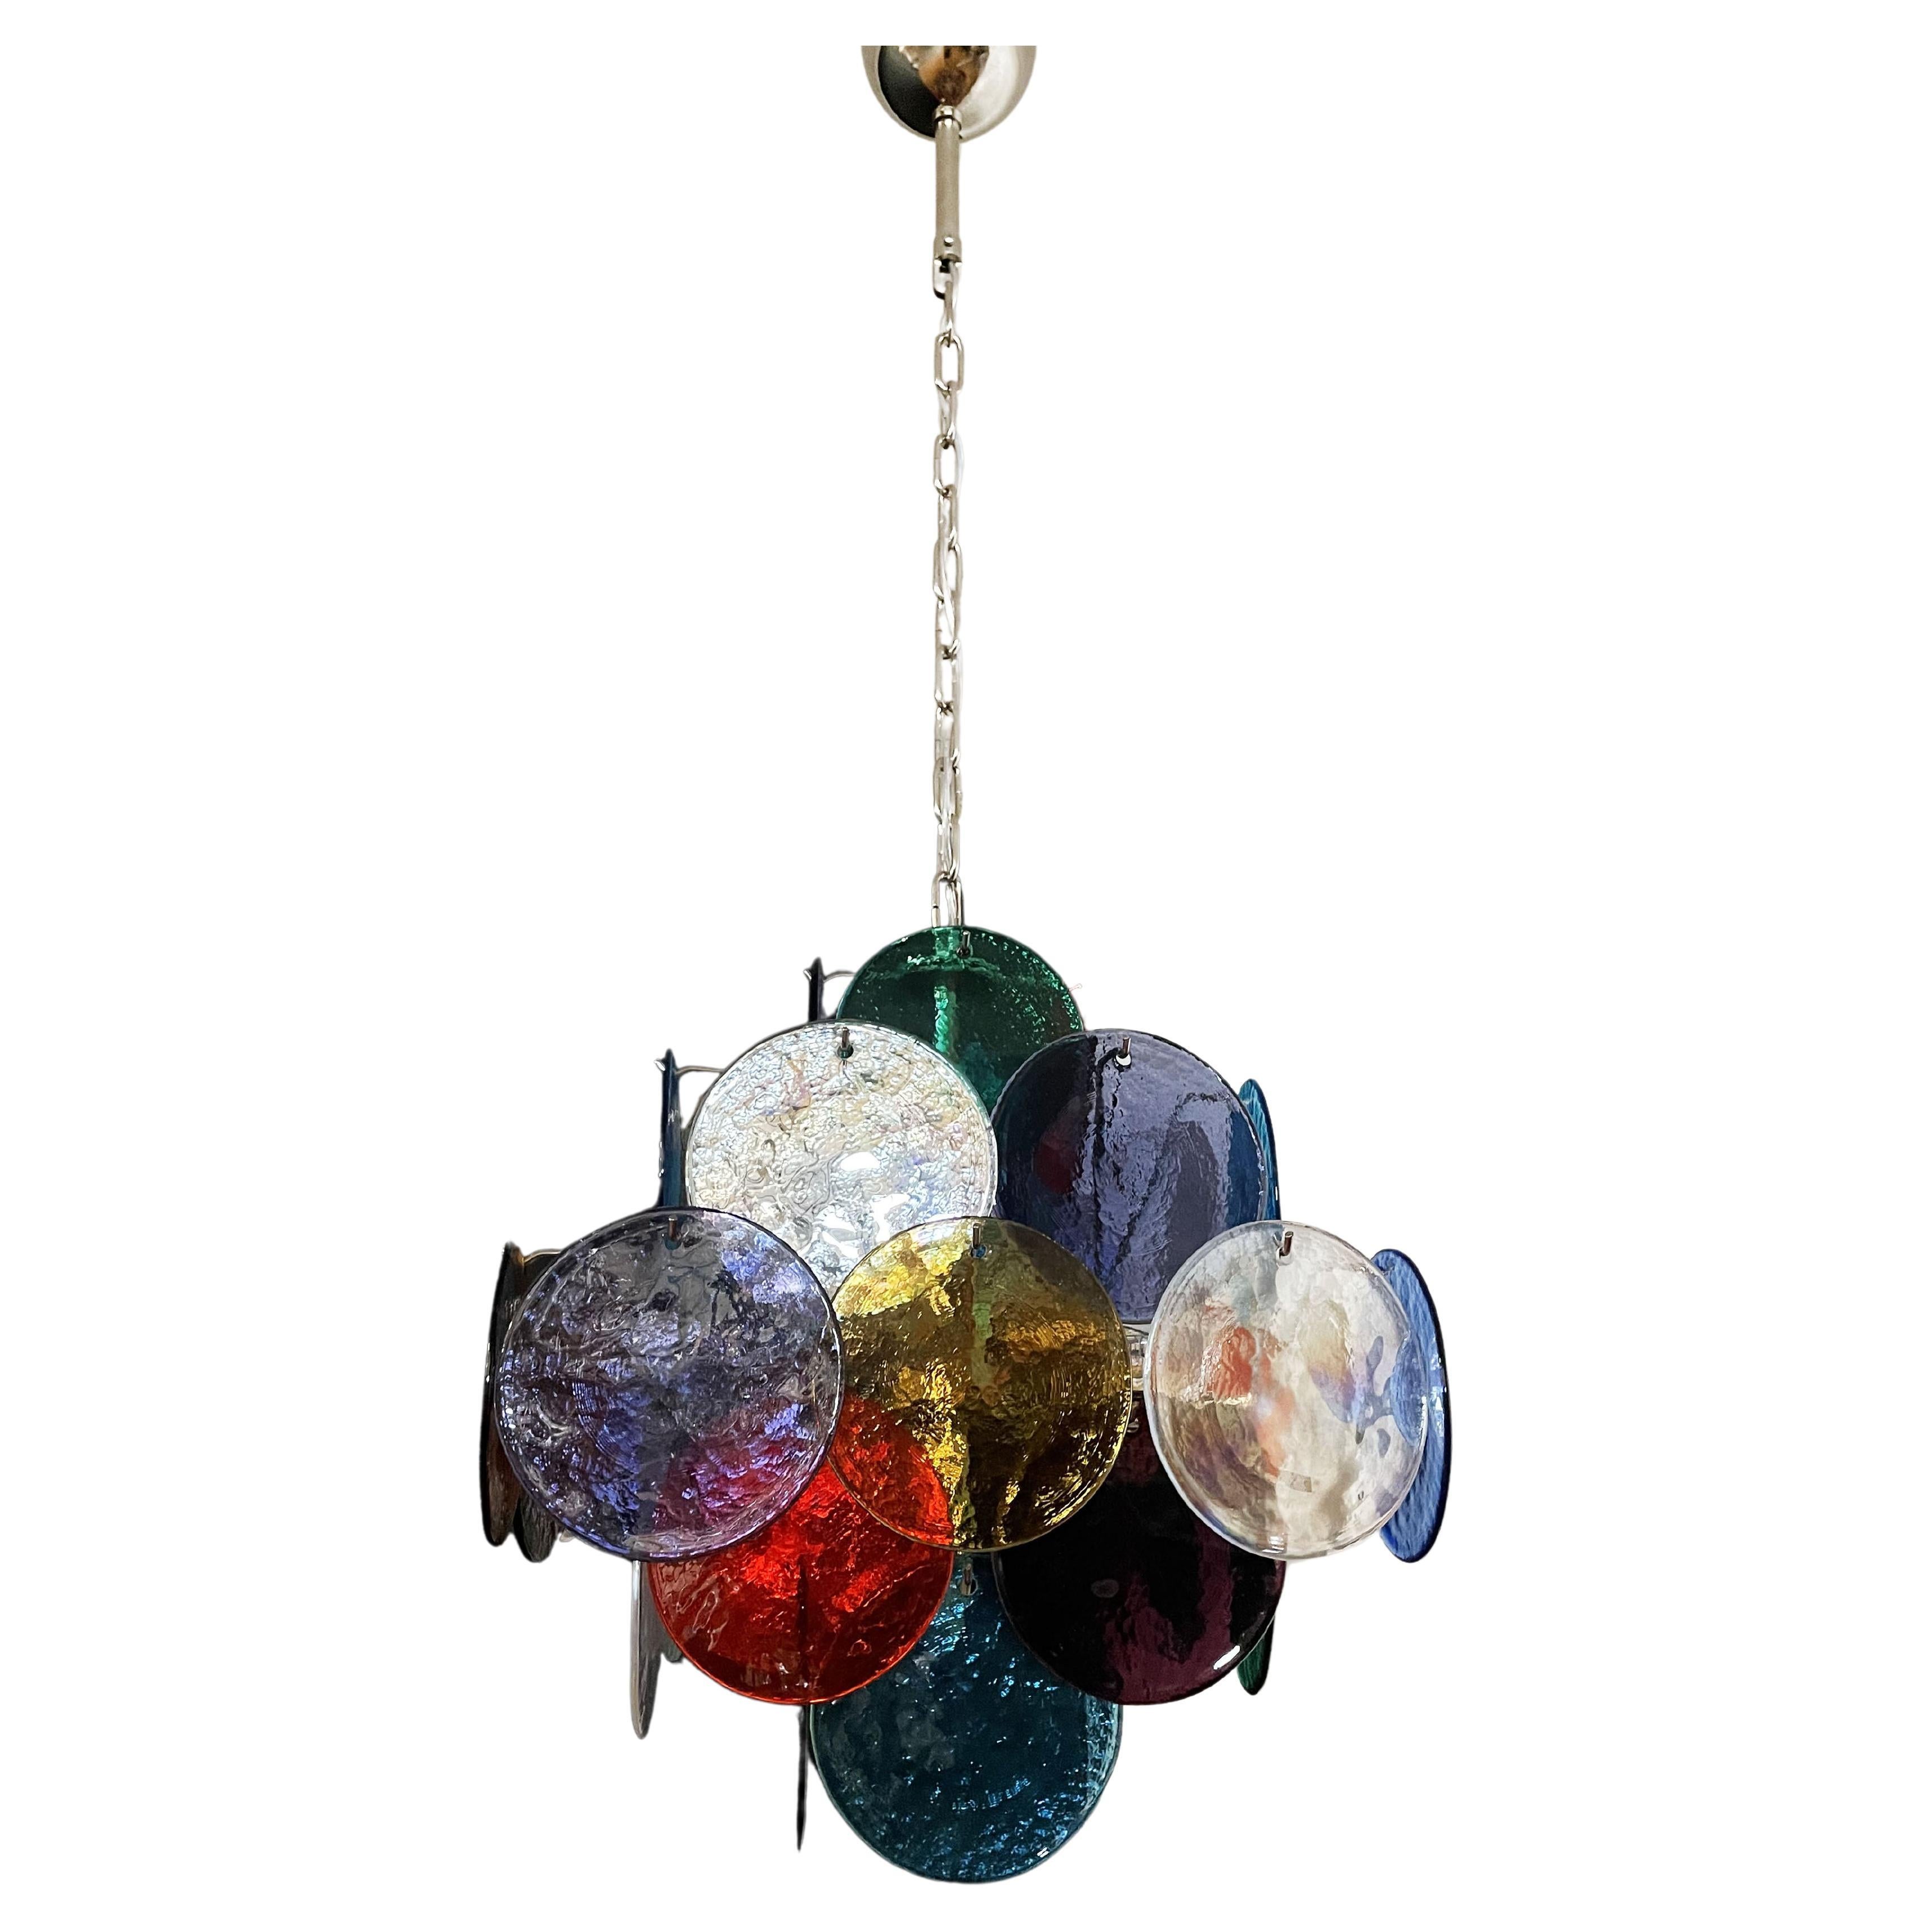 Vintage Italian Murano chandelier - 36 multicolored disks